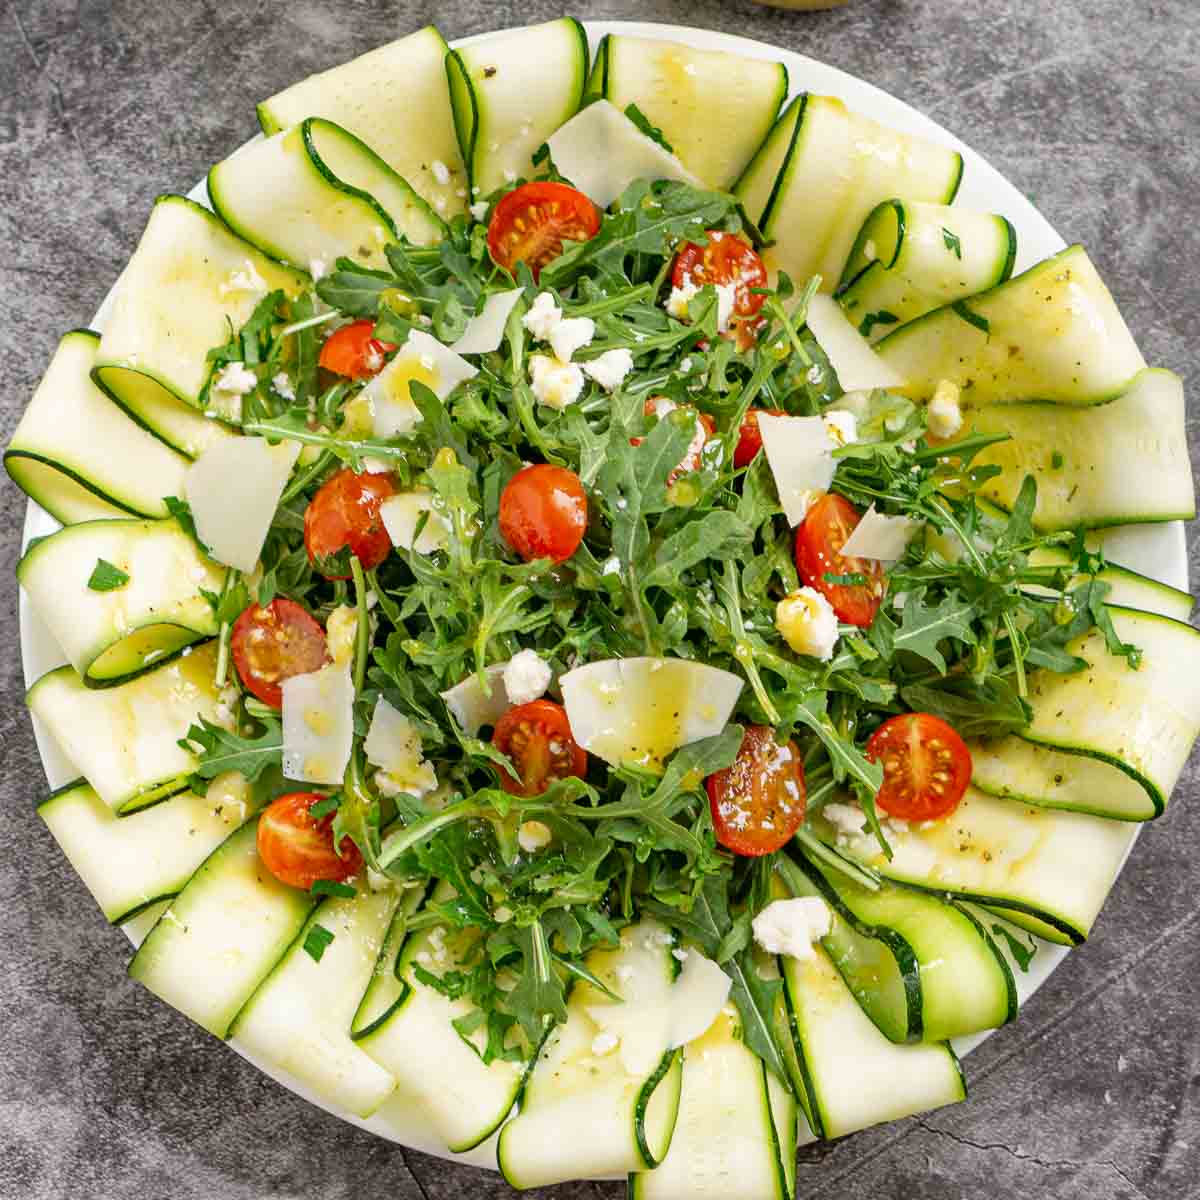 Zucchini carpaccio salad arranged on a platter